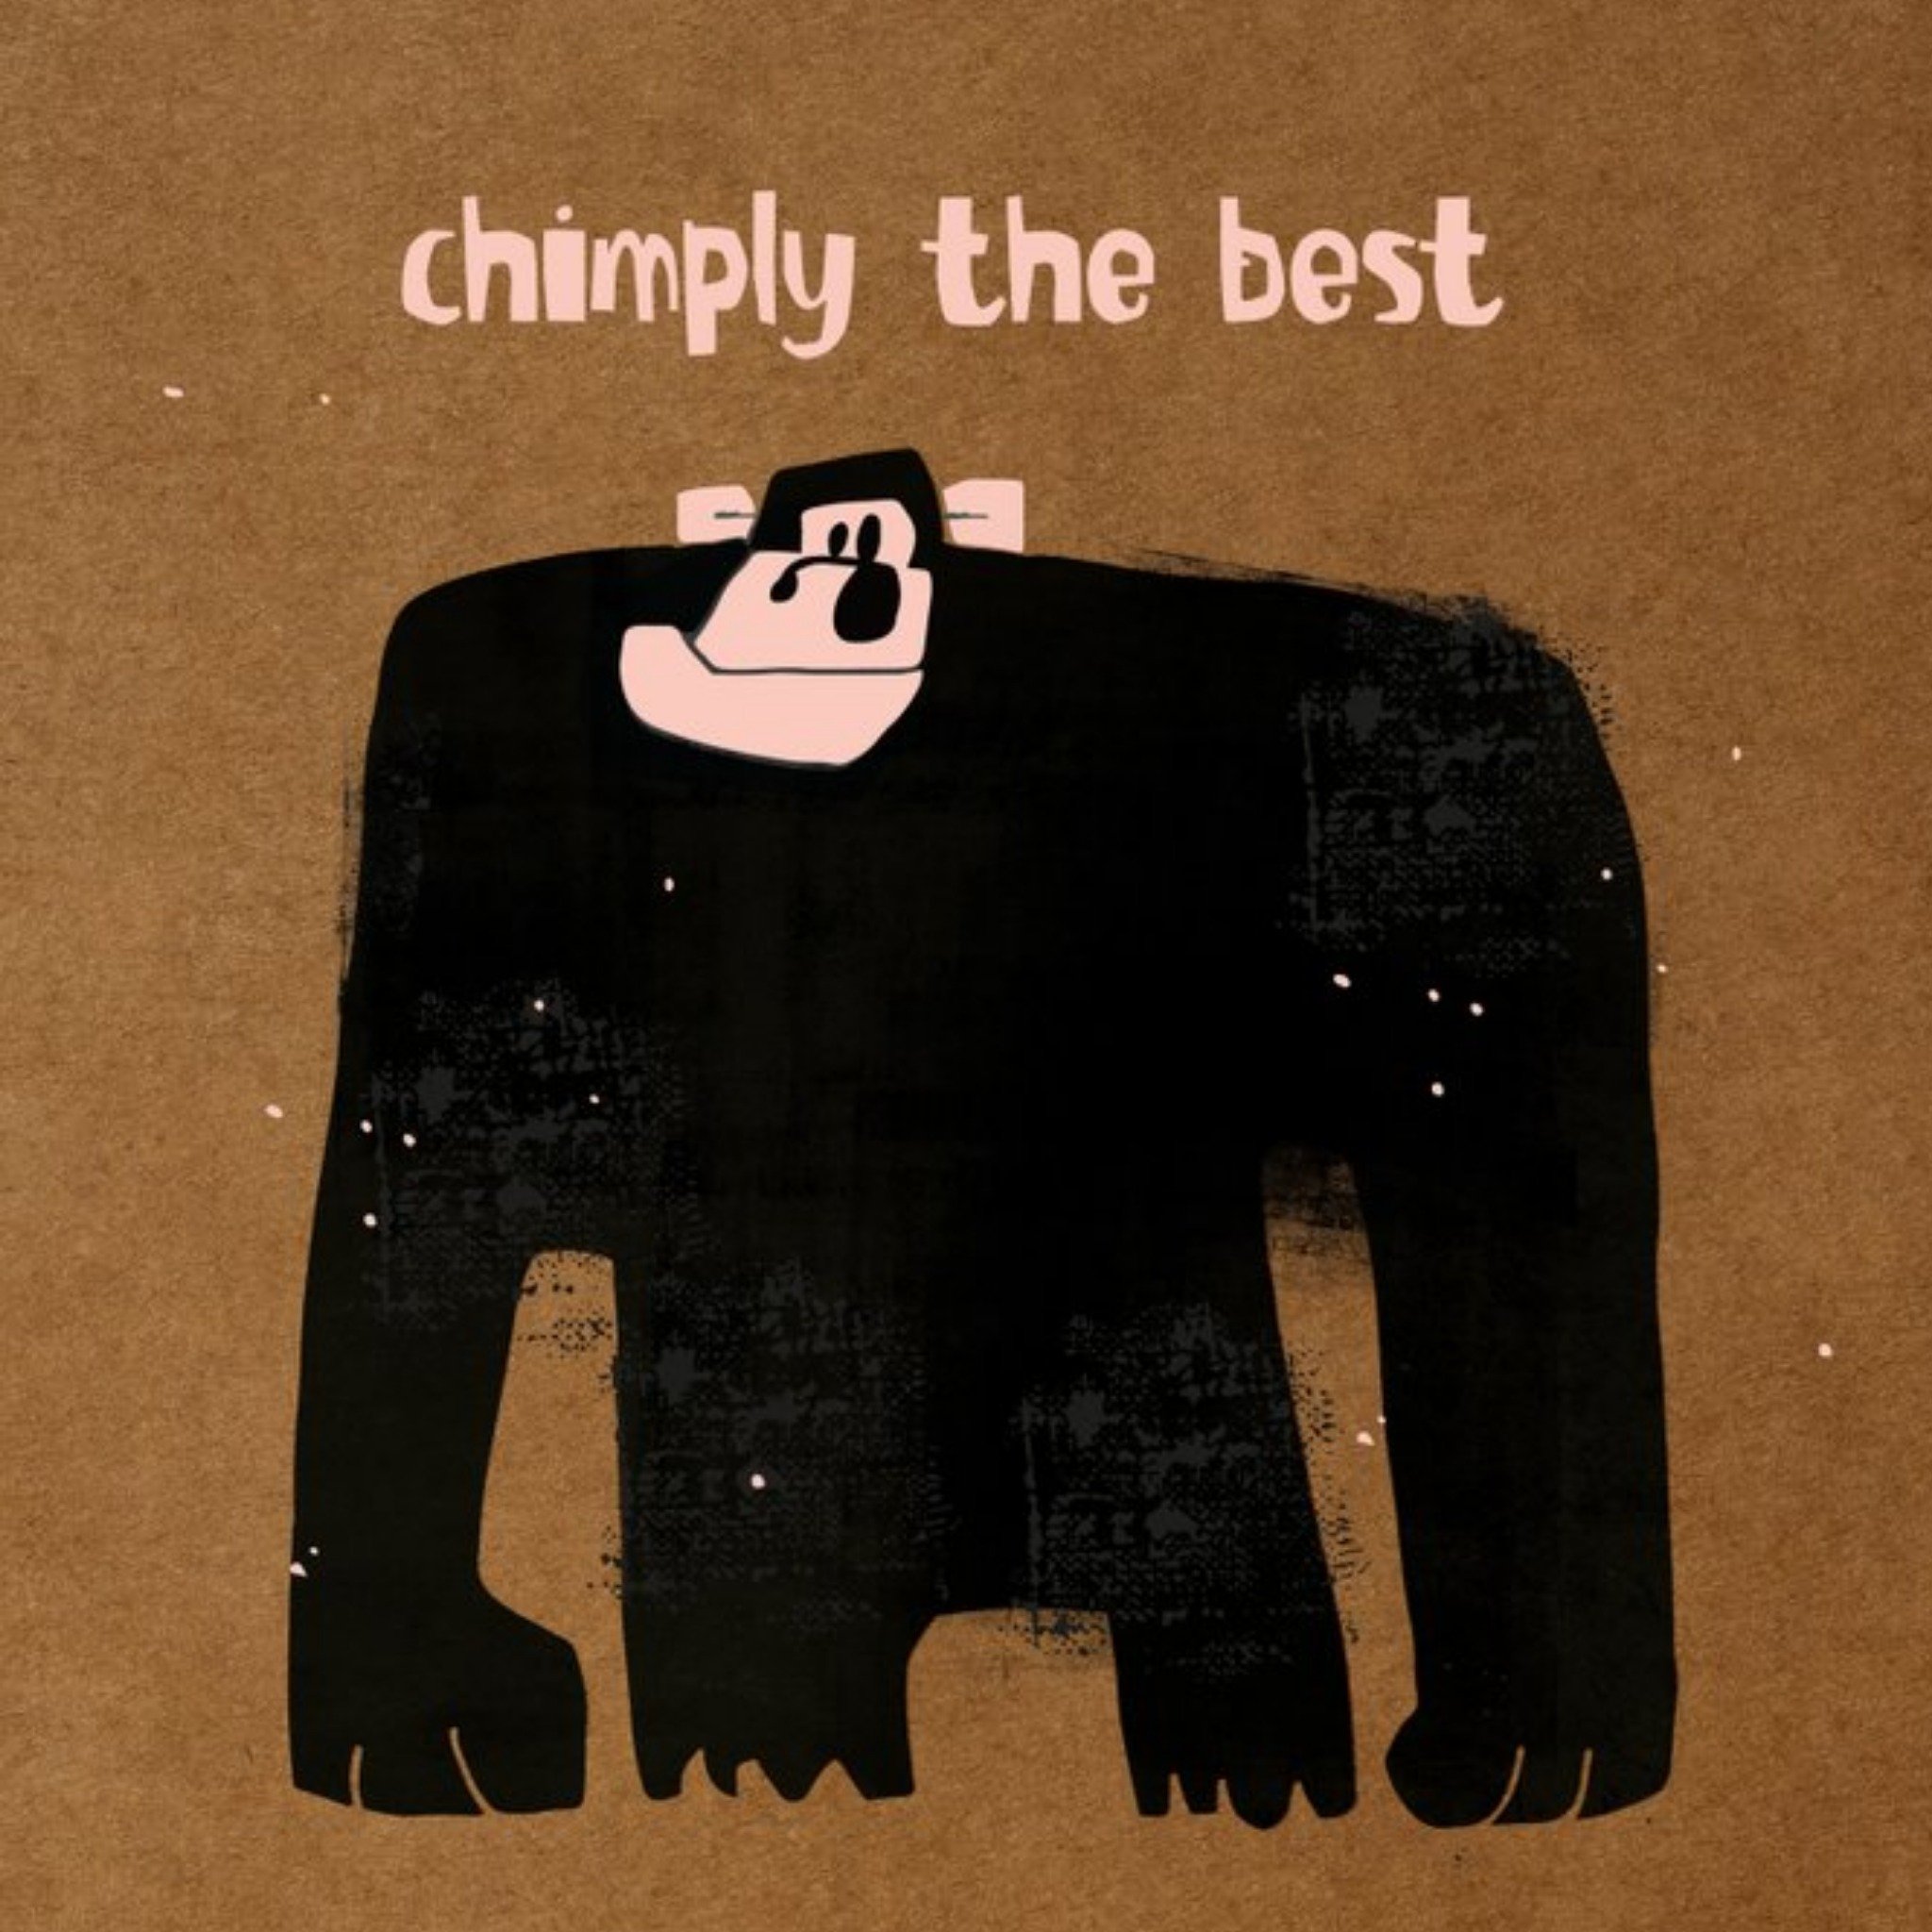 Moonpig Illustrated Chimp Pun Birthday Card, Square